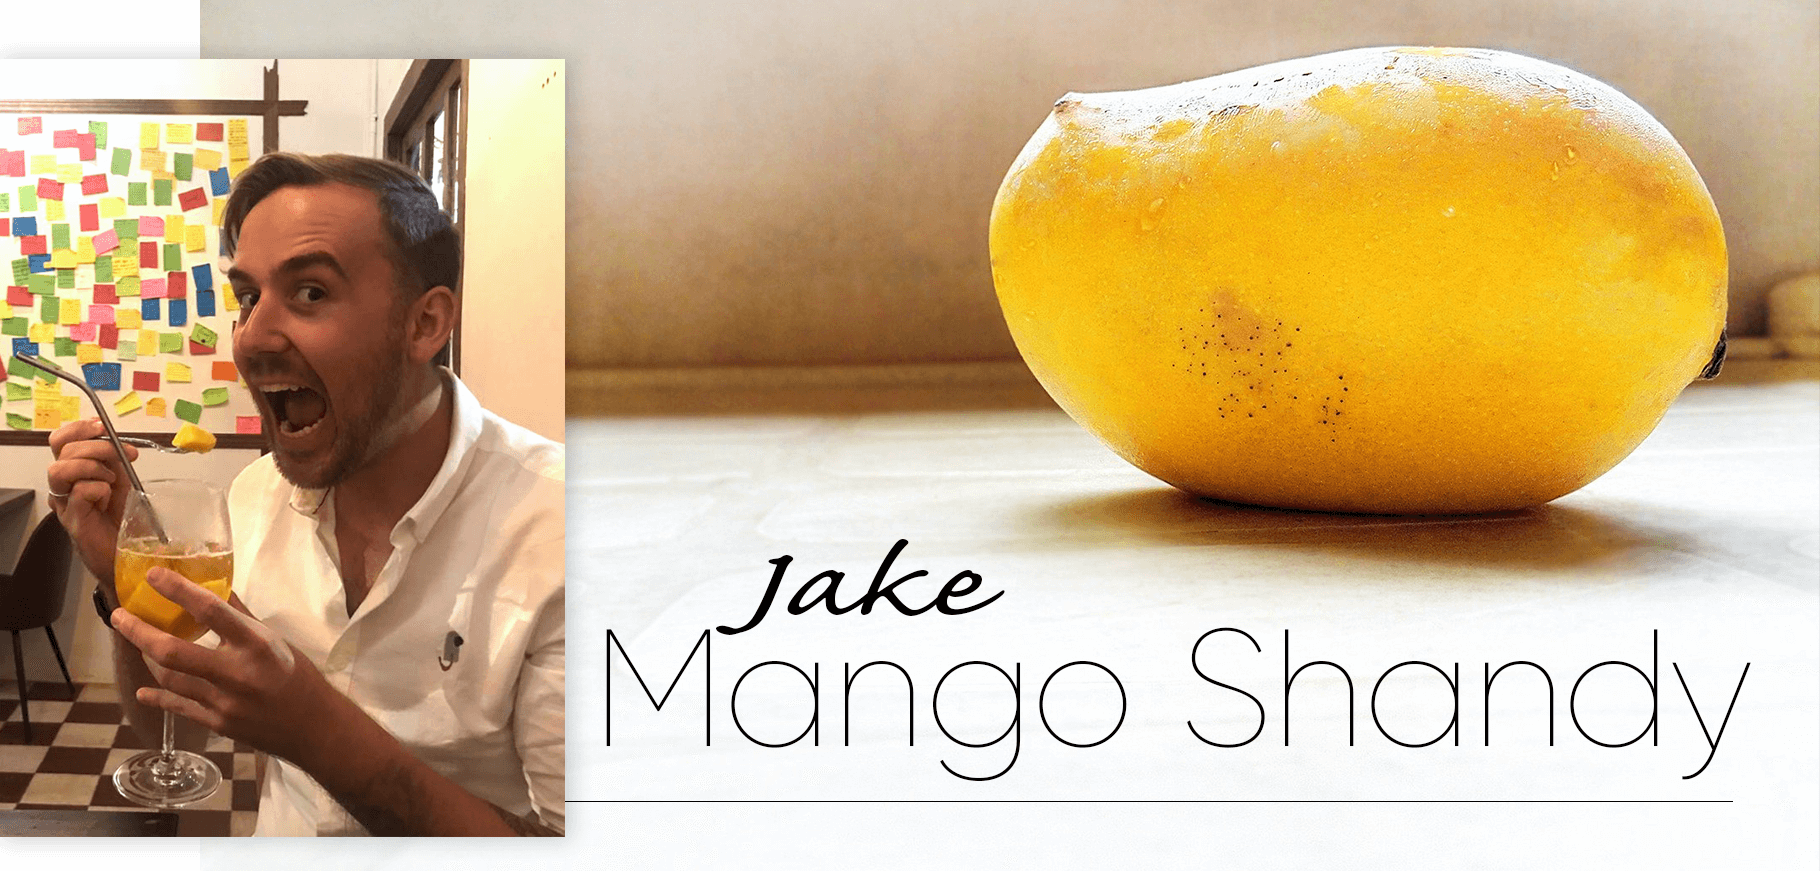 Jake and Mango Shandy